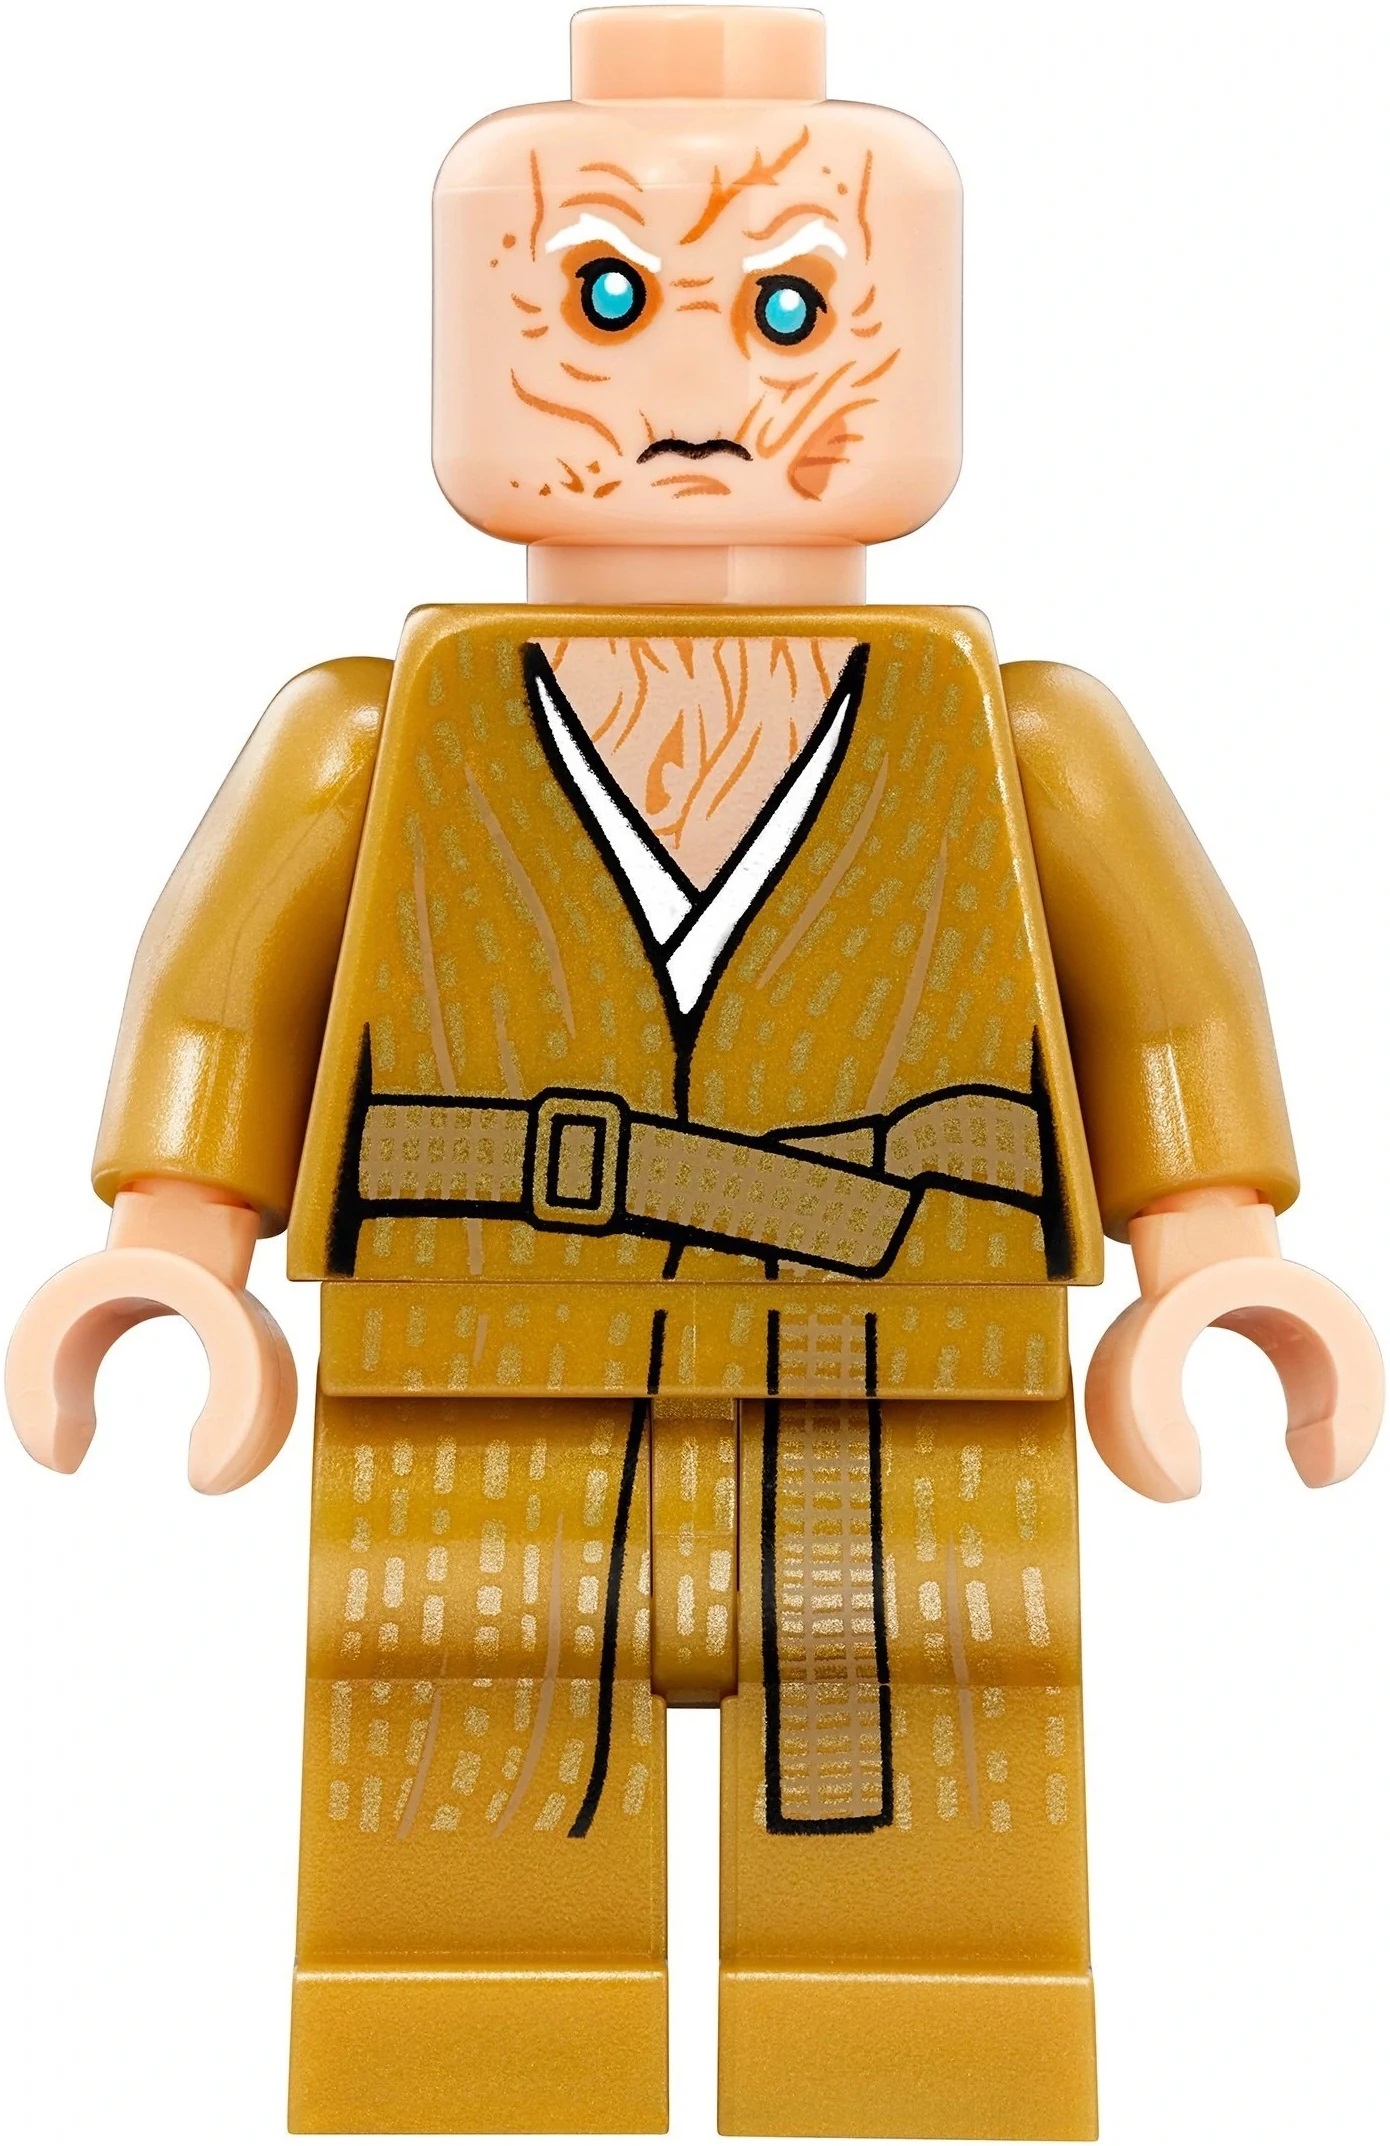 LEGO Star Wars Star Wars Supreme Leader Snoke - Last Jedi - 75190